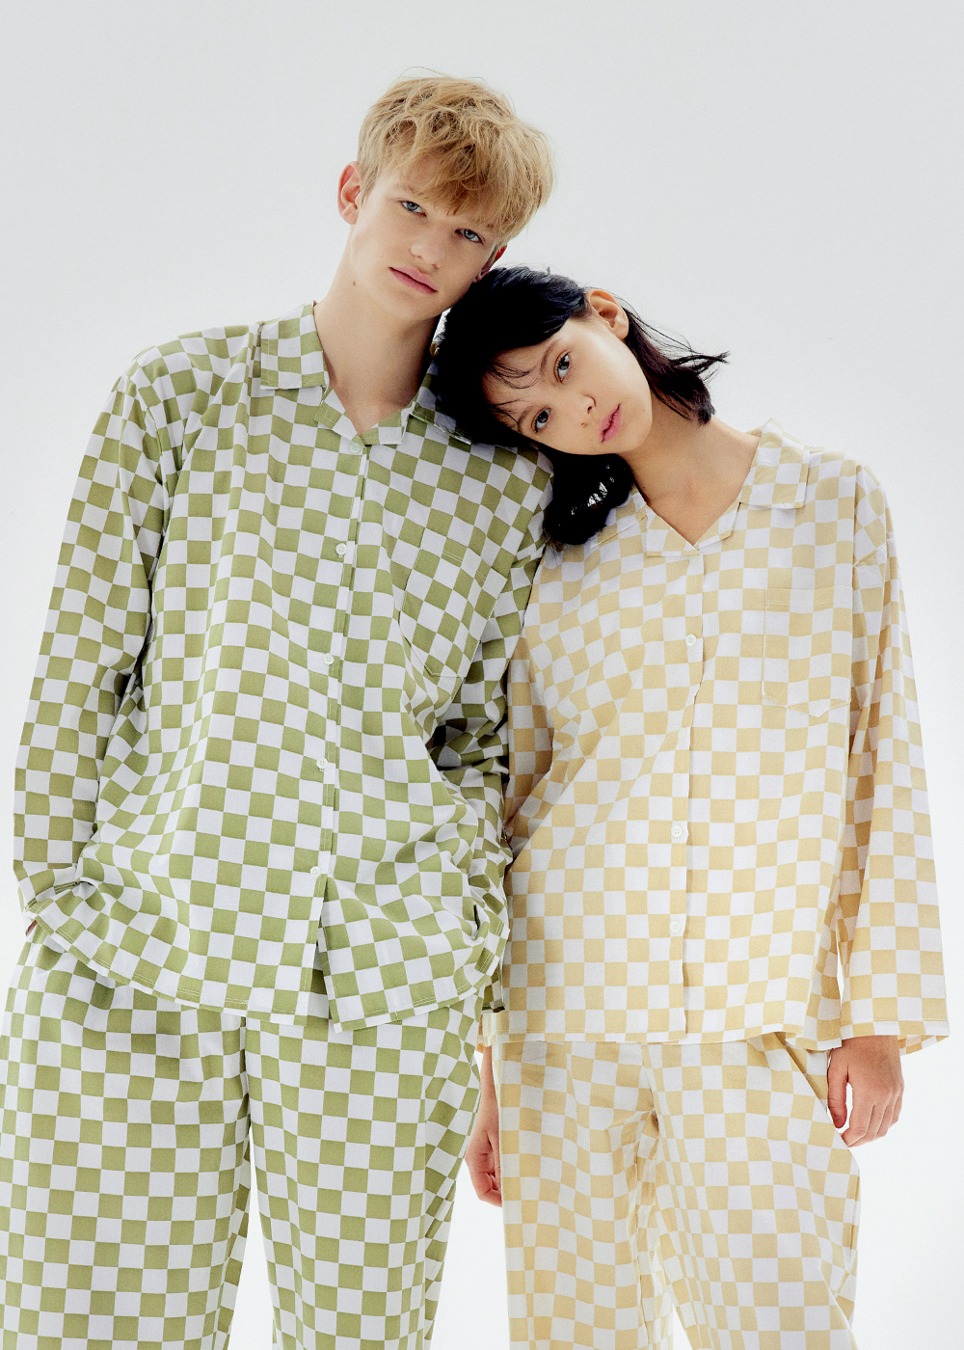 Chilling Pajama Long Sleeve Shirts (3colors)